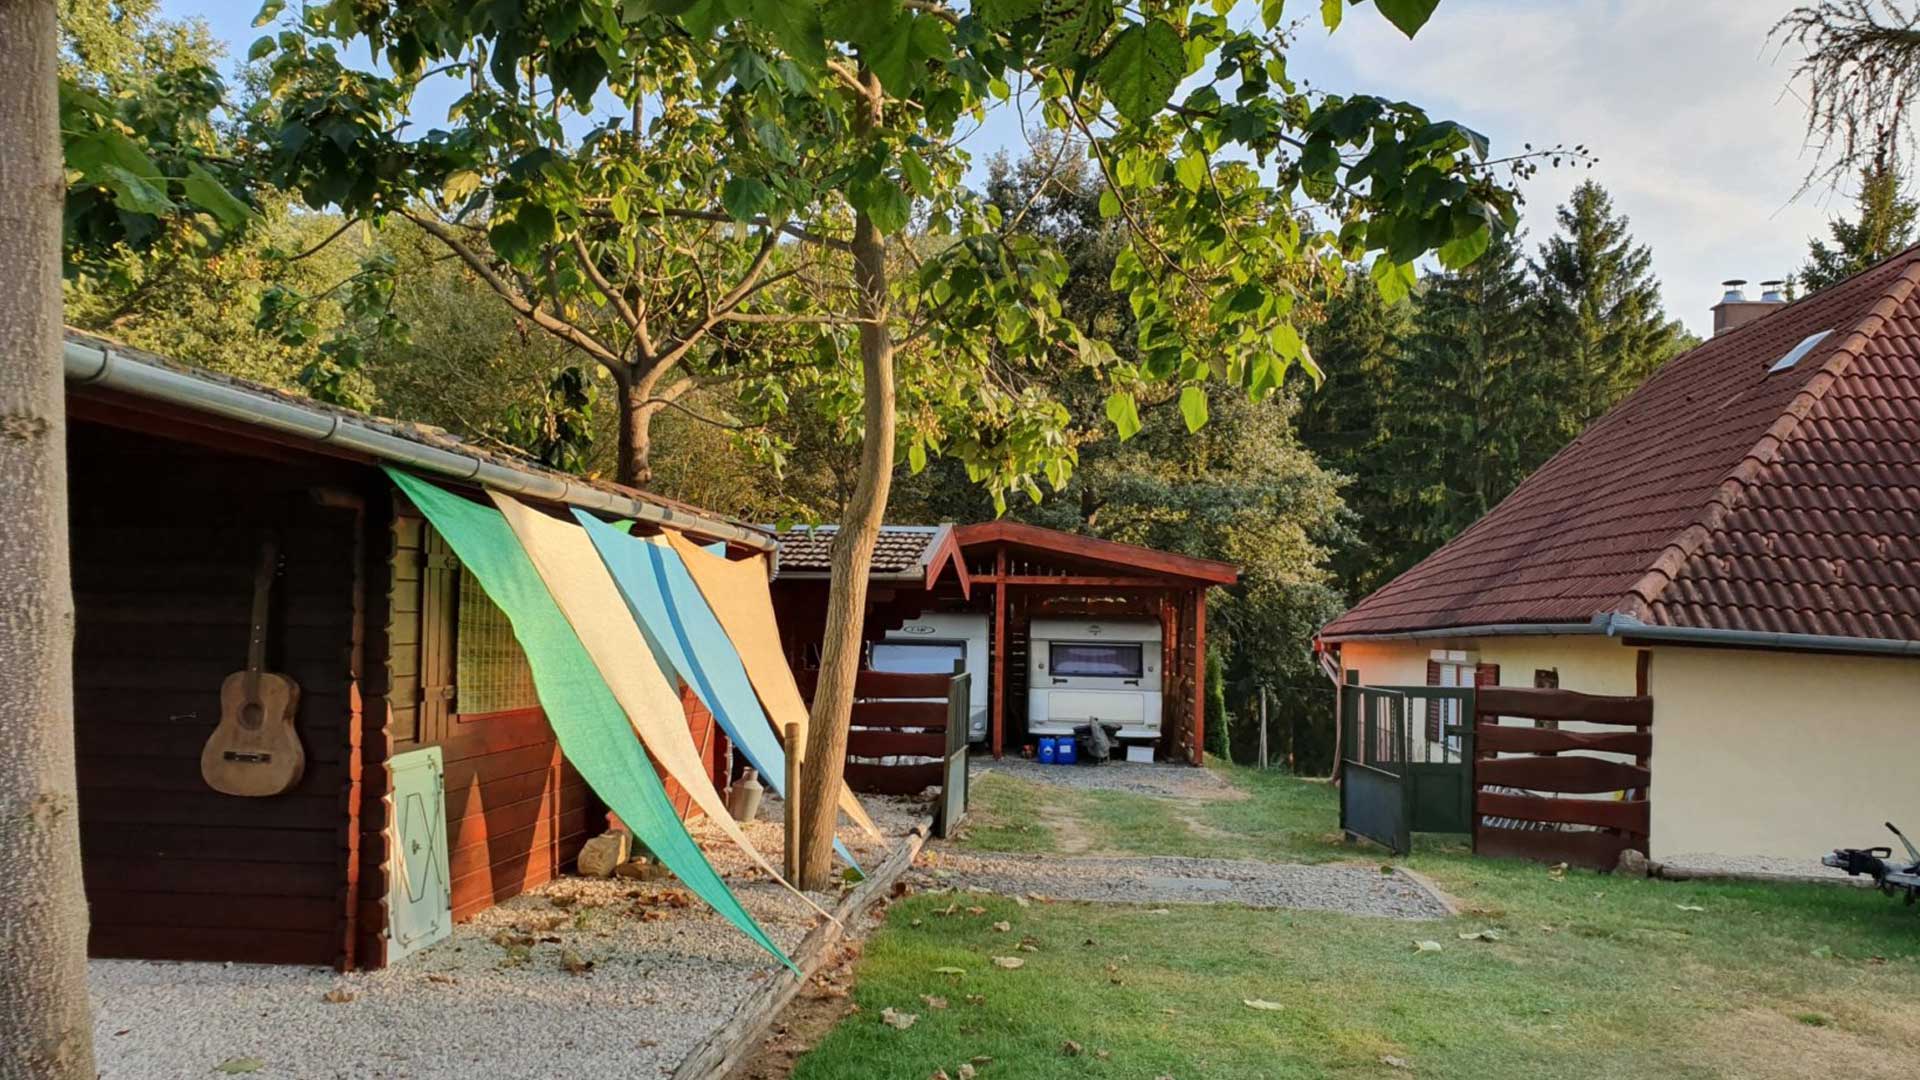 Hungary campground camper disposal